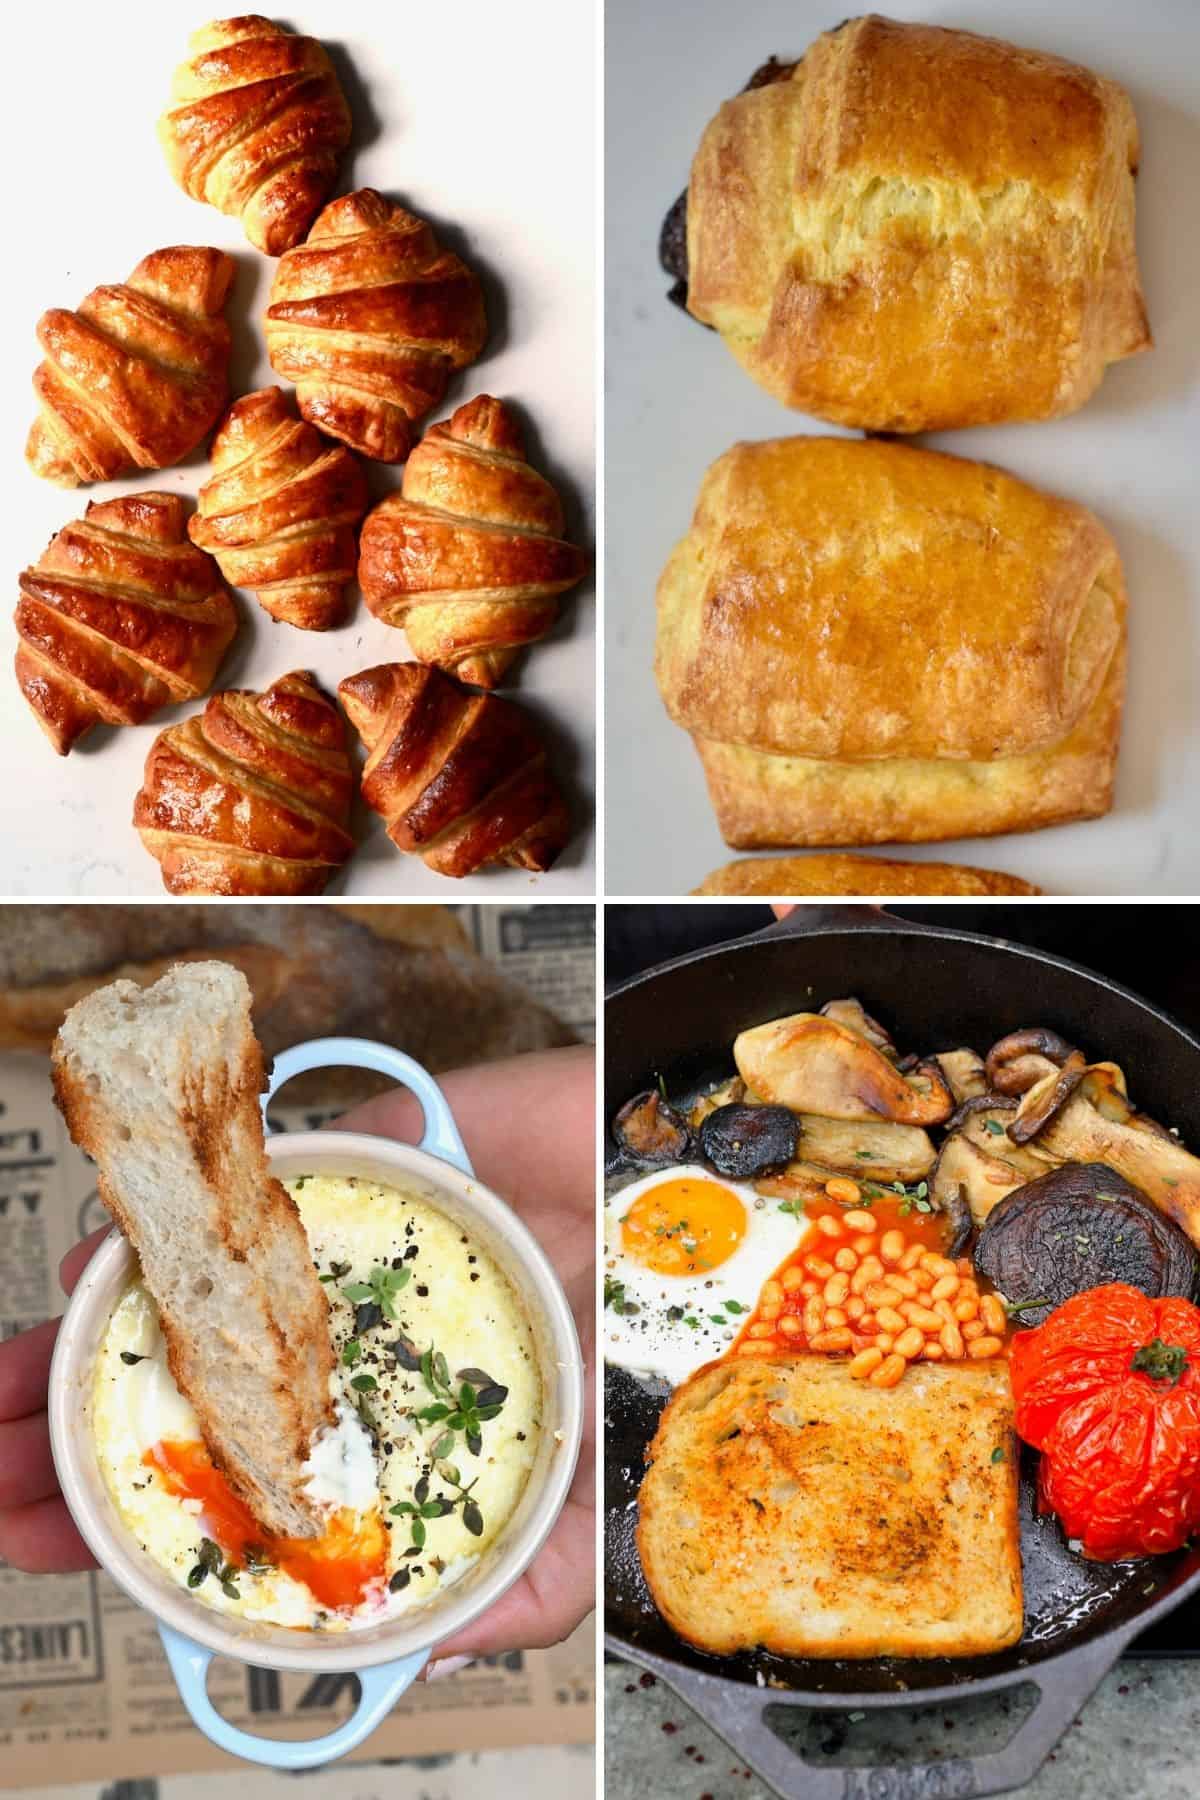 Four West European breakfast ideas - croissants, pains au chocolat, sheered eggs, English full breakfast.